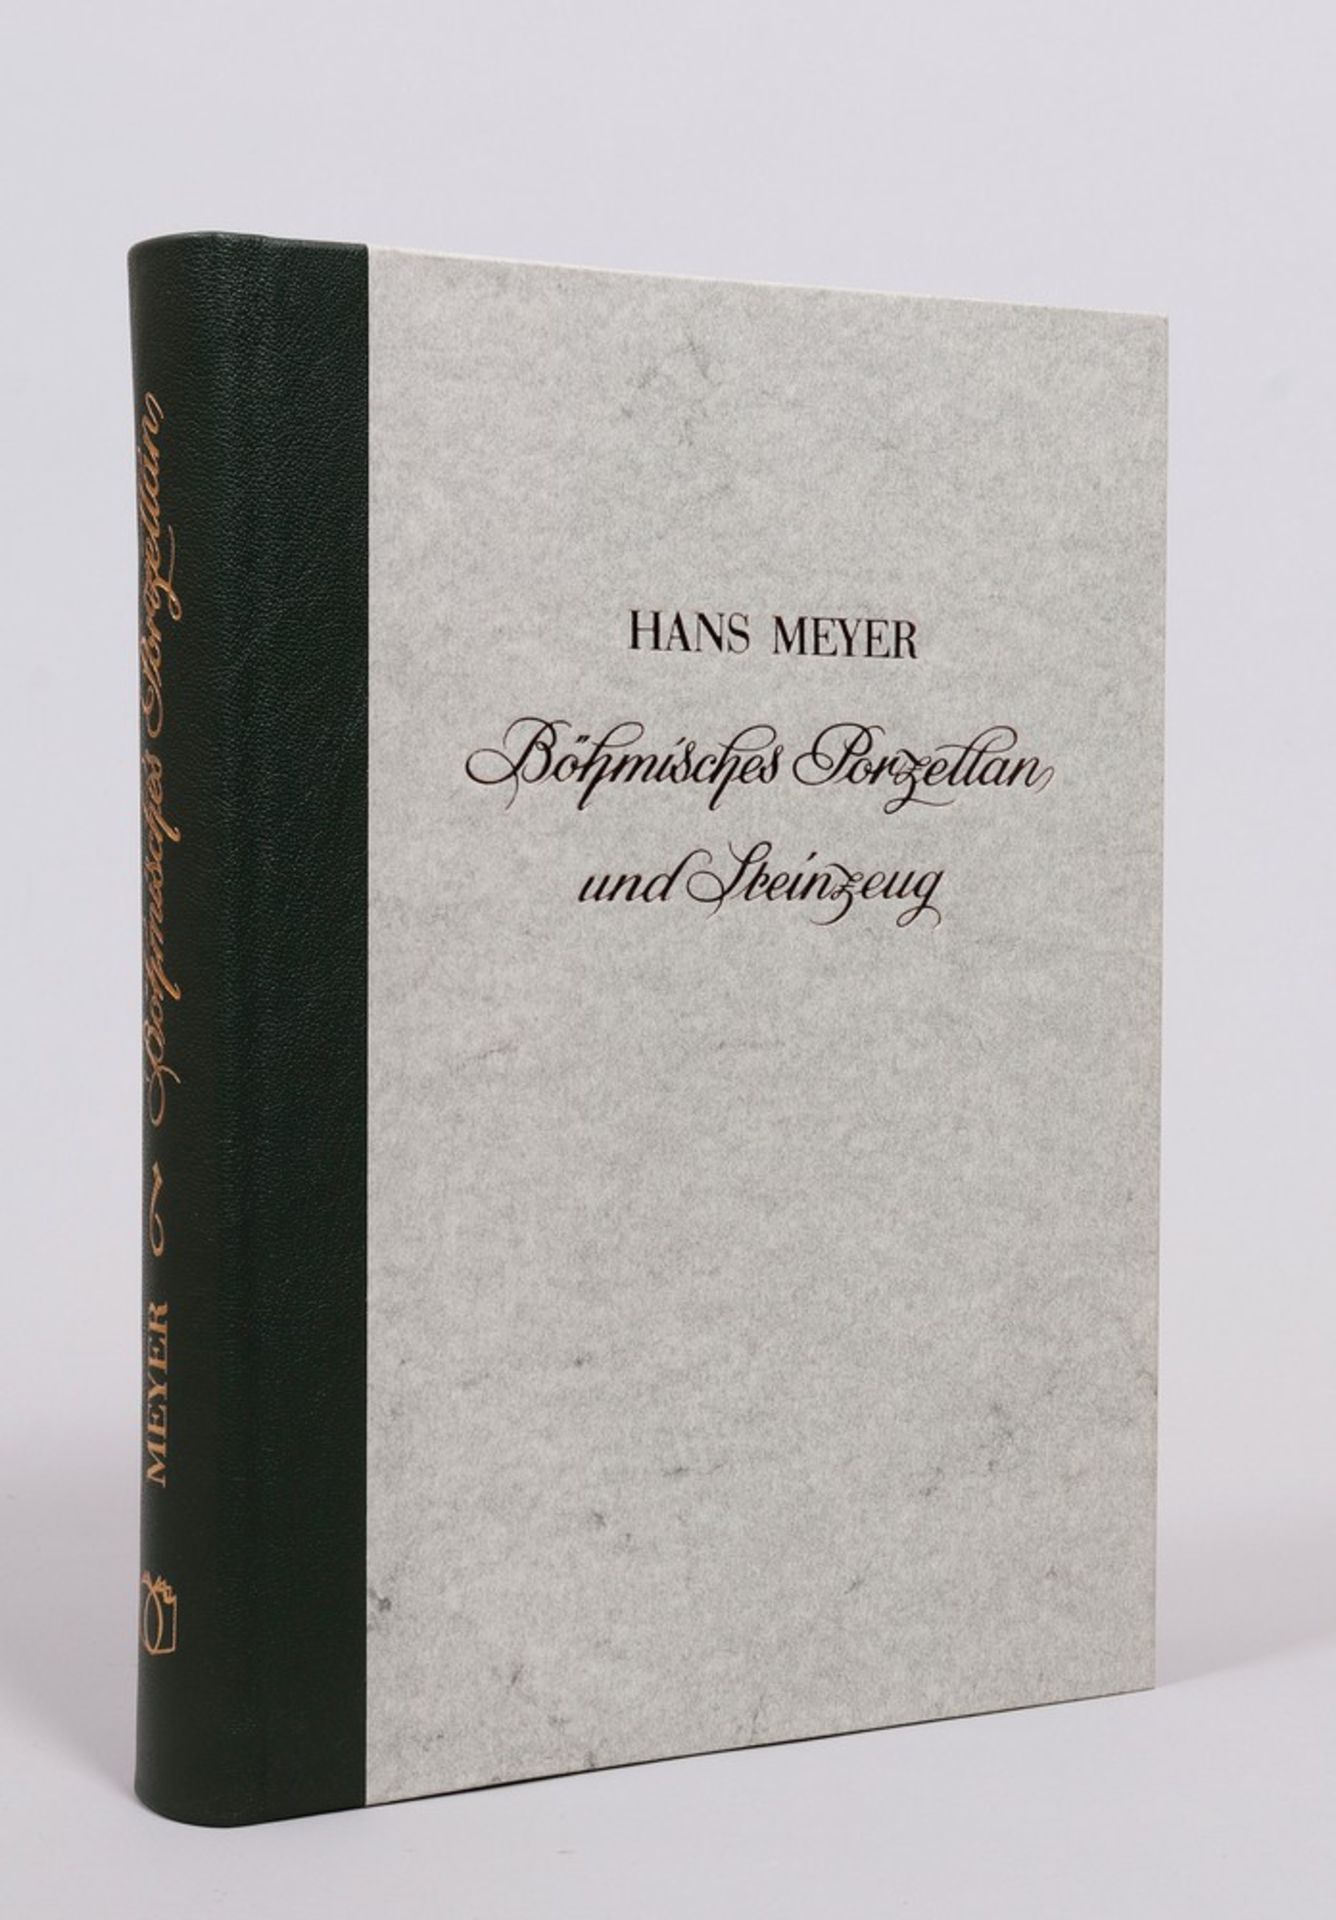 Book, Hans Meyer, "Bohemian Porcelain and Stoneware", facsimile print